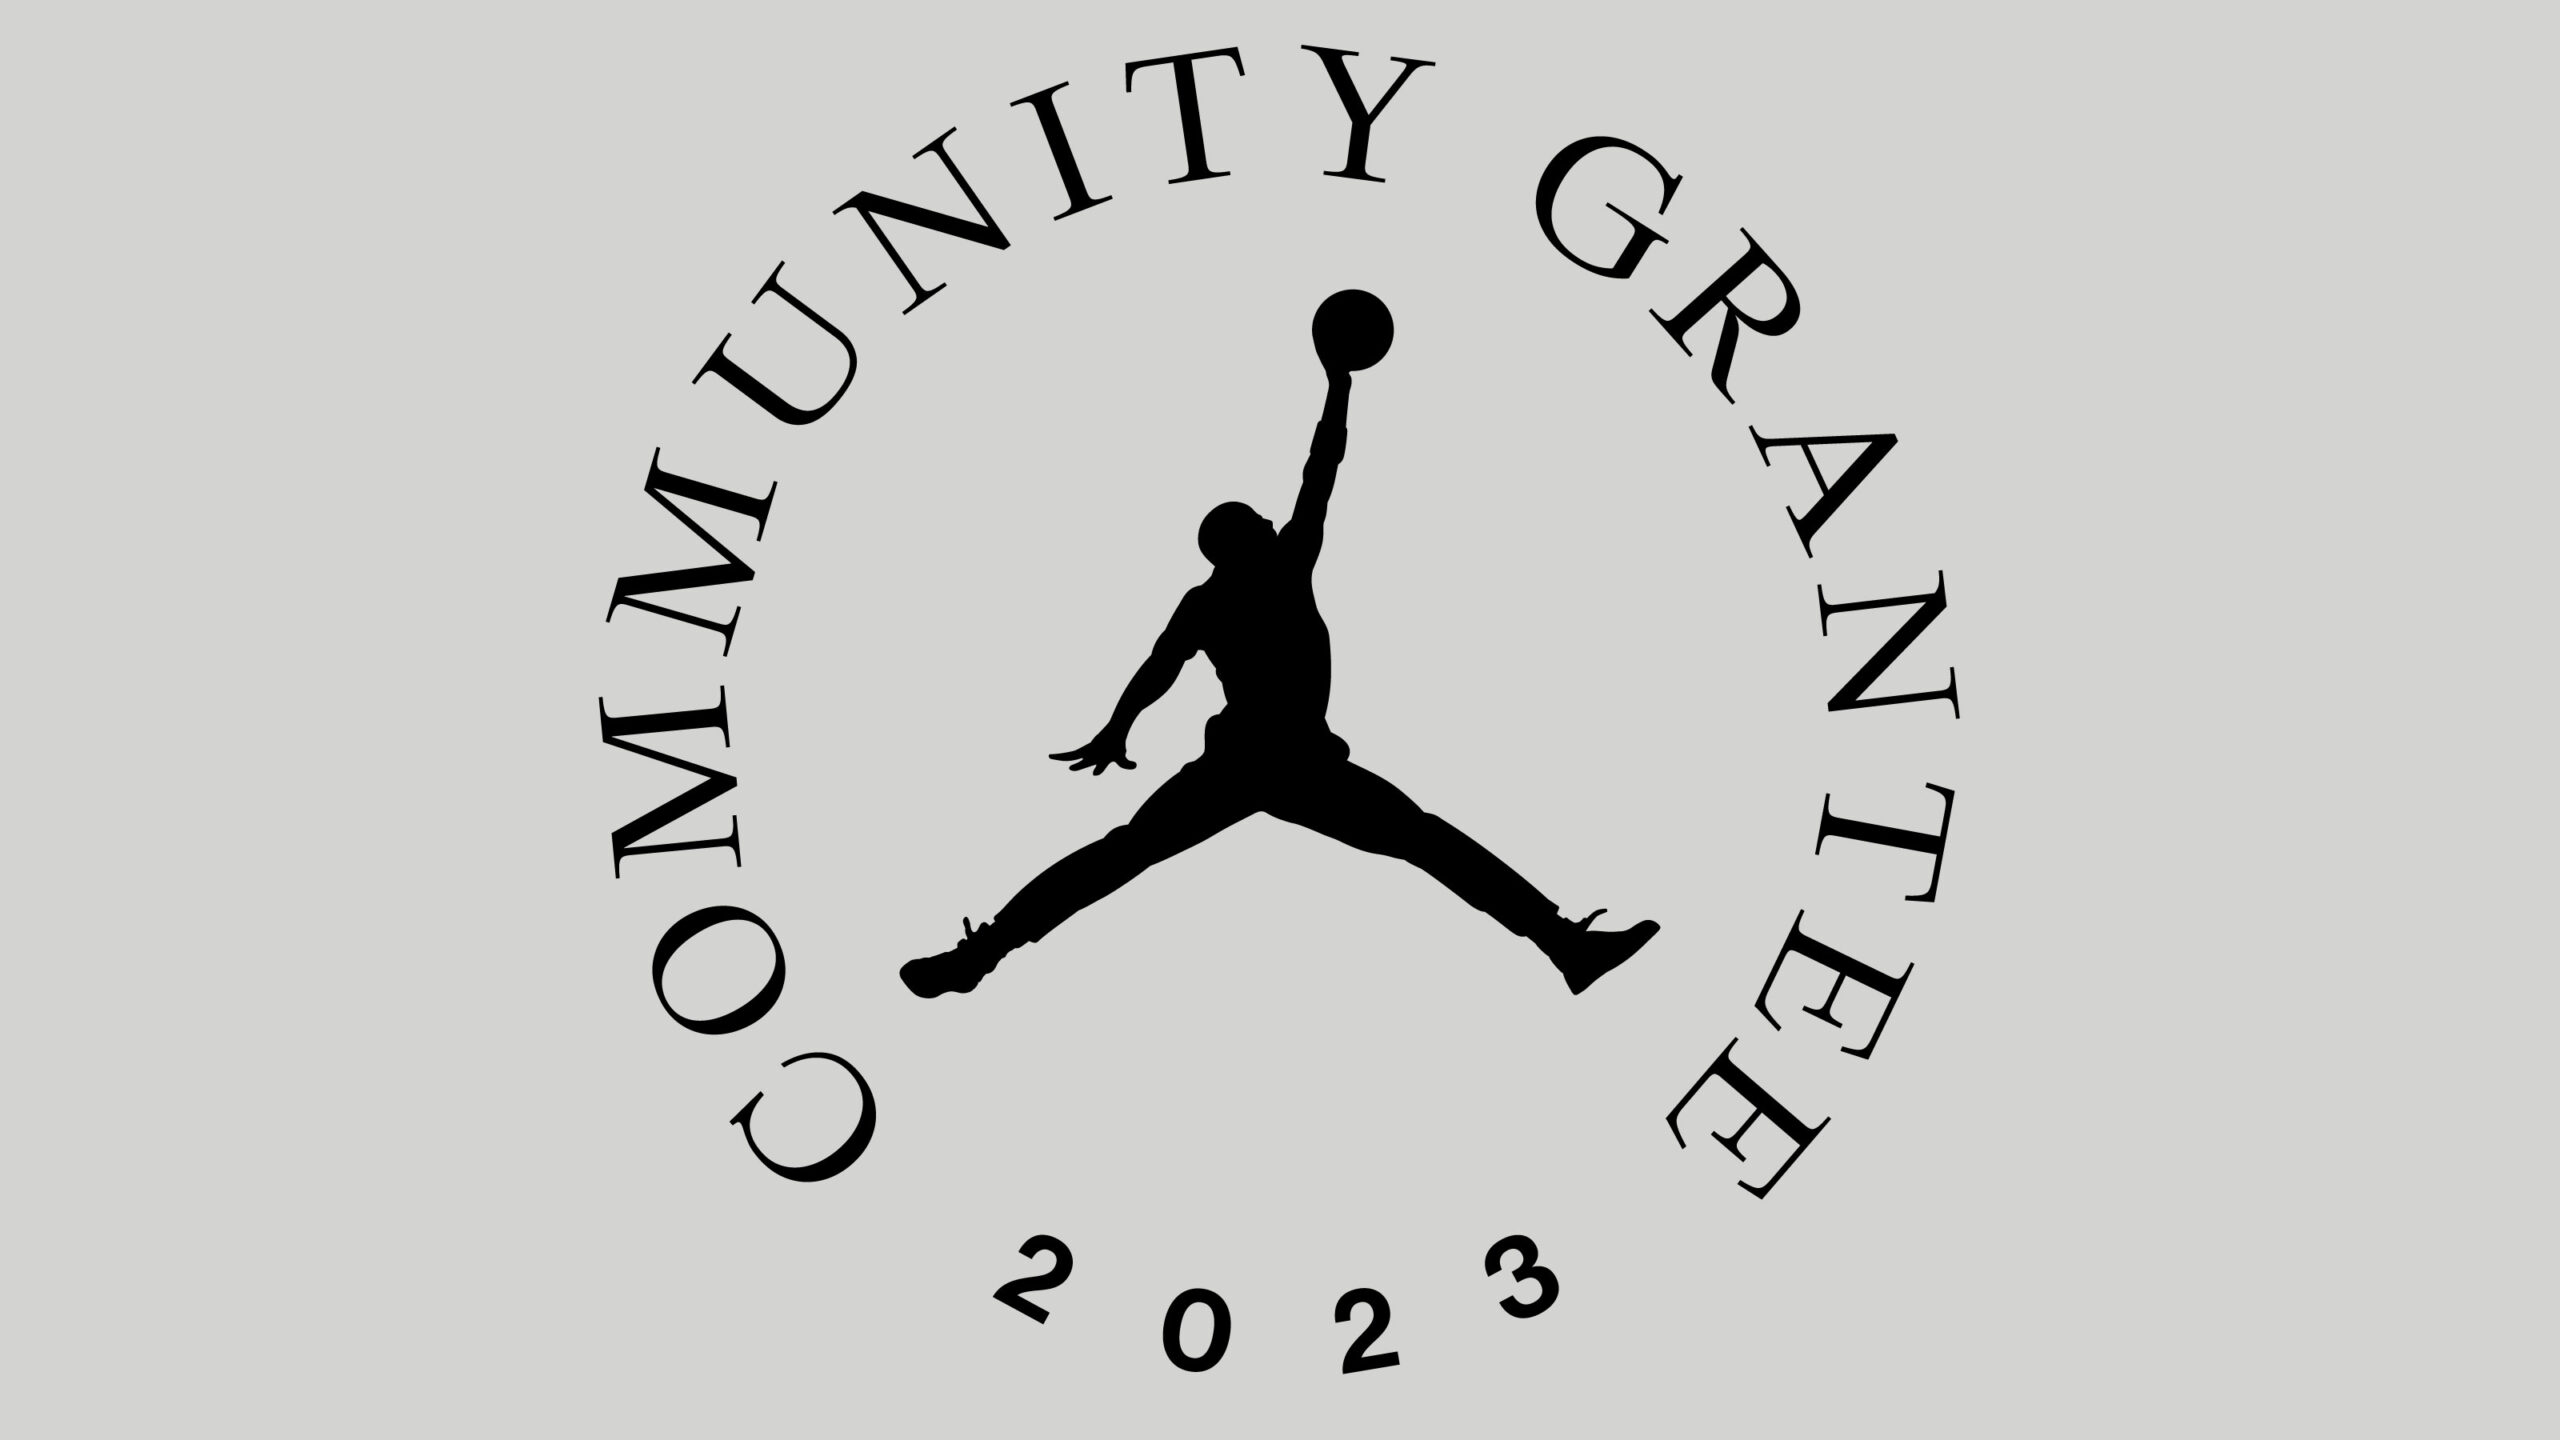 Michael Jordan and Jordan Brand announce 2.3 million in community